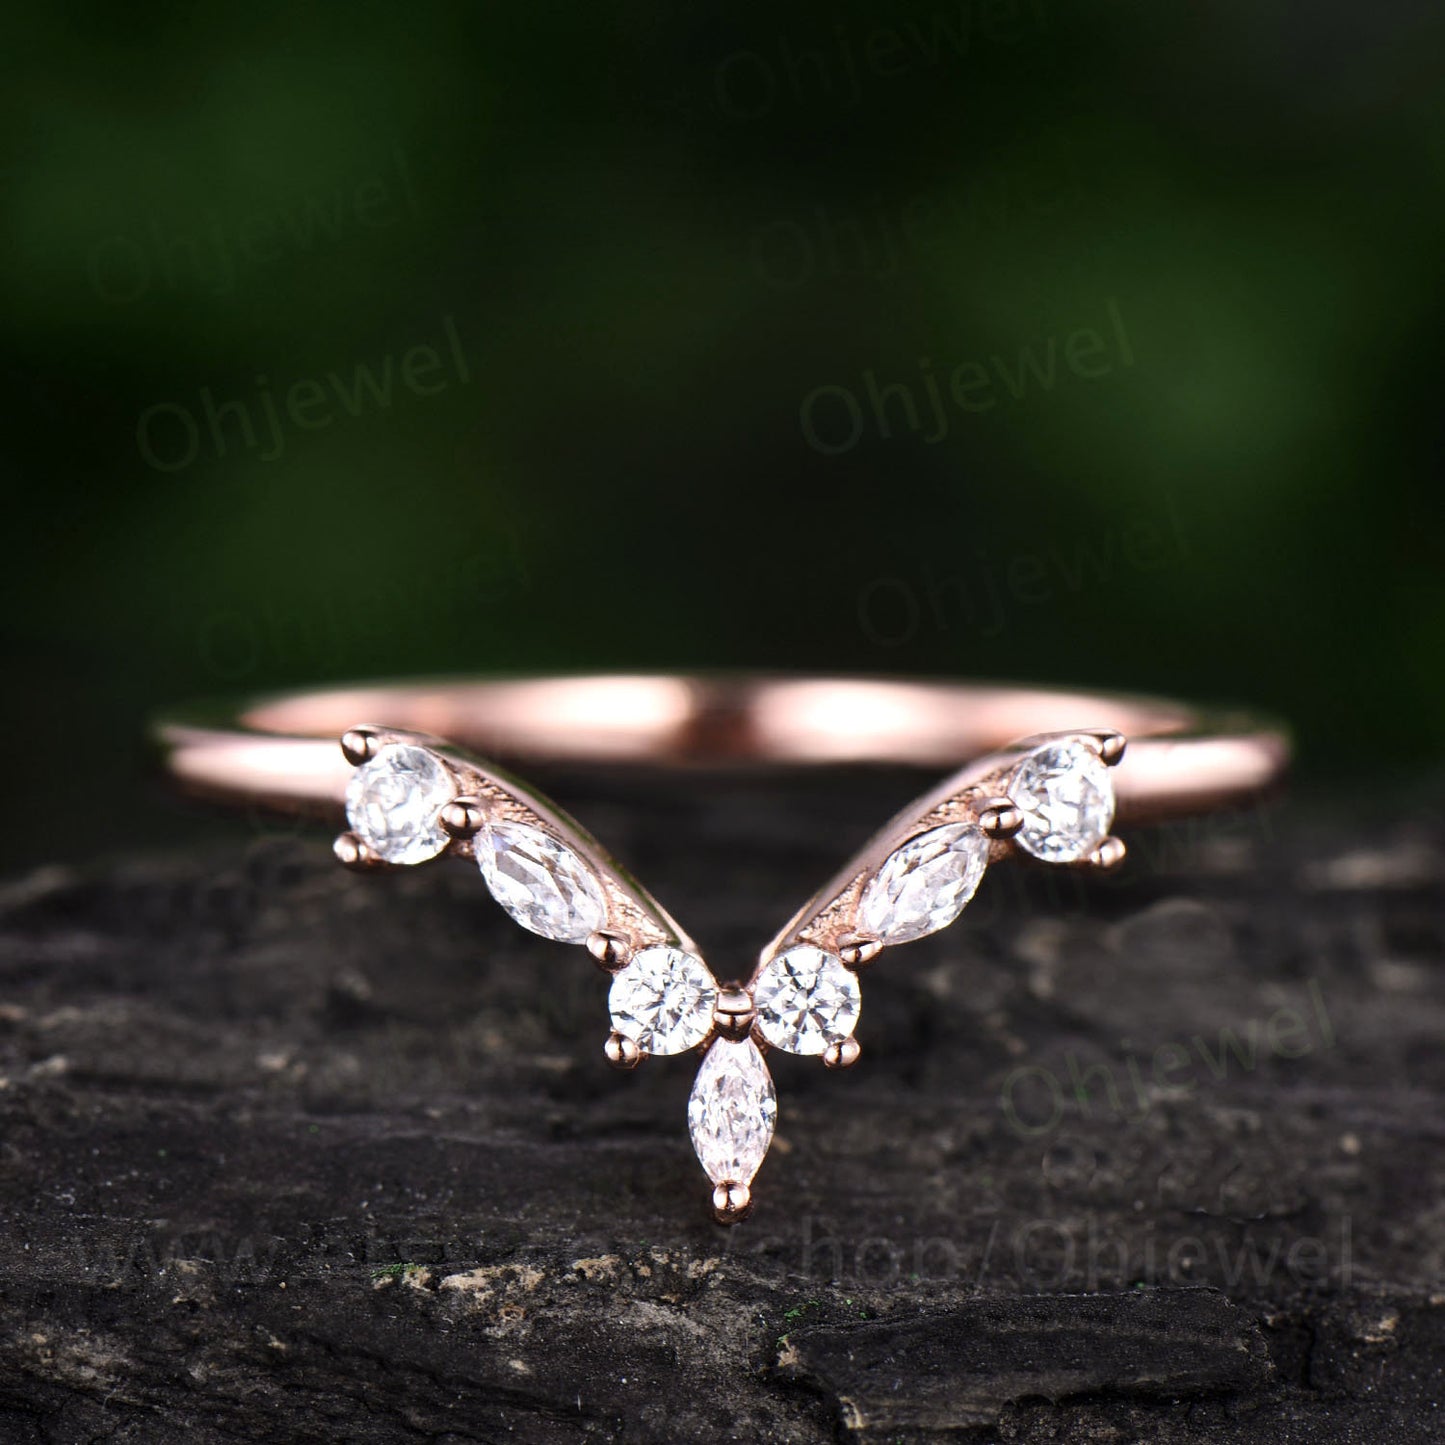 V shaped curved moissanite wedding band marquise ring 7 stone ring solid 10k 14k 18k rose gold ring vintage unique wedding ring bridal gift